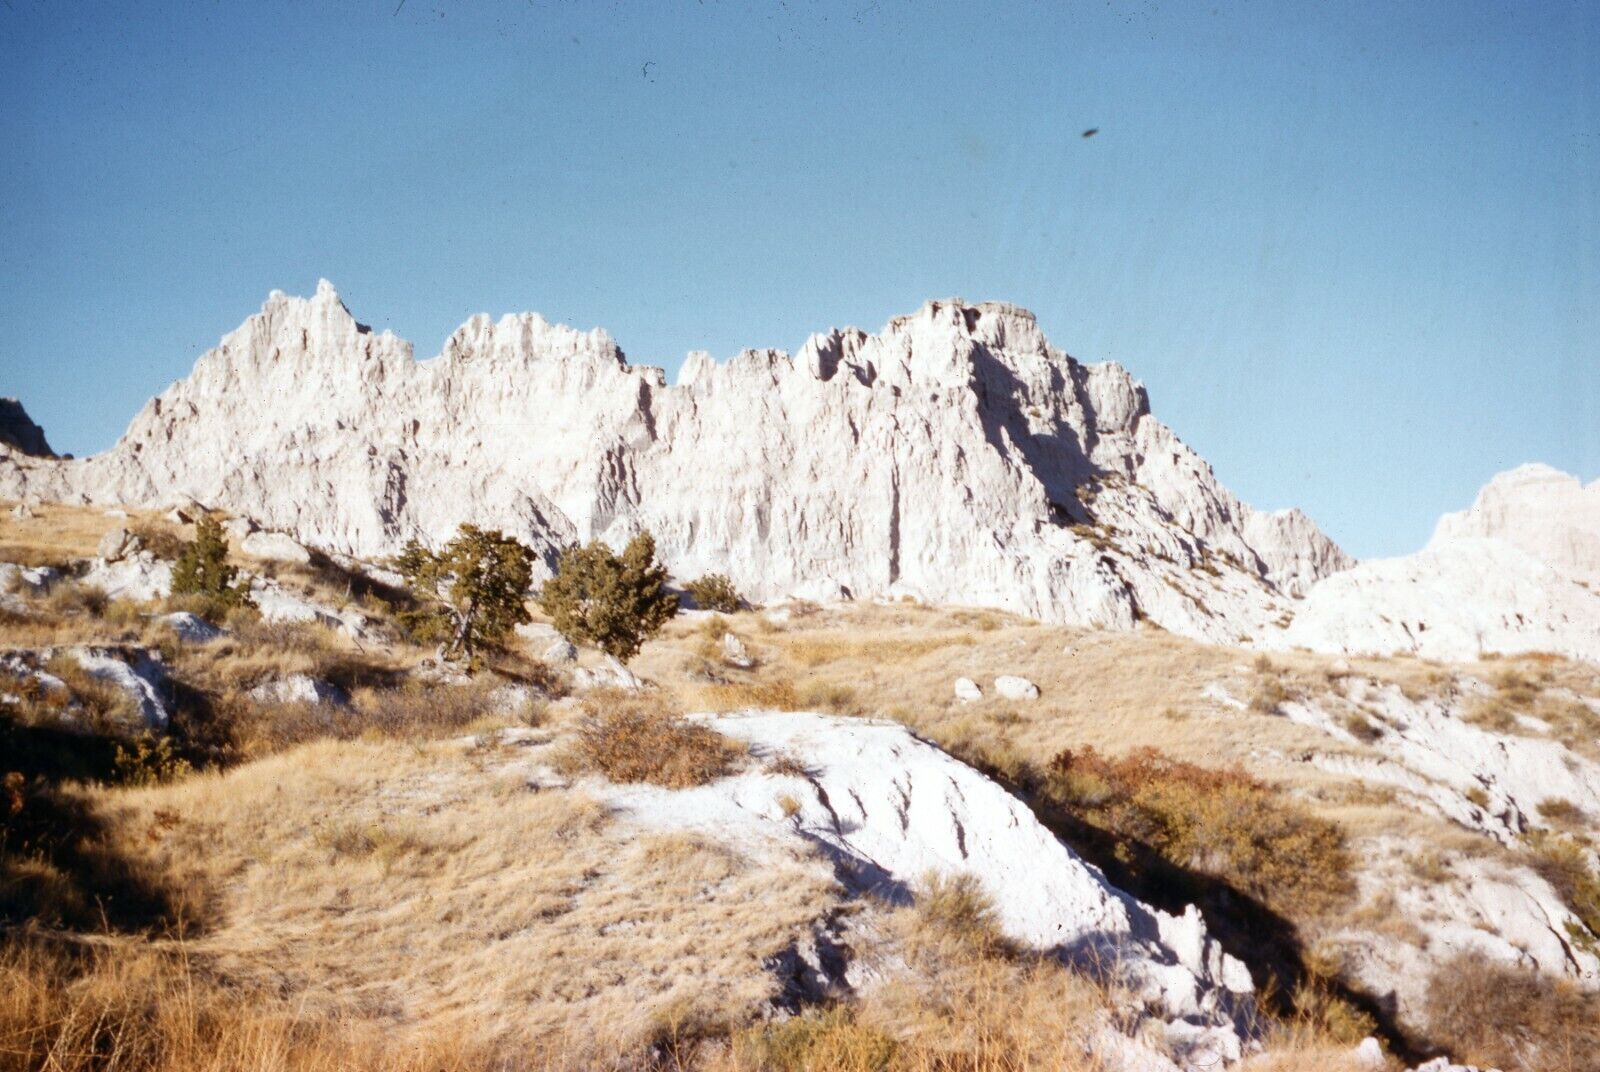 Vtg 1958 35mm Slide Photo The Black Hills of South Dakota f51